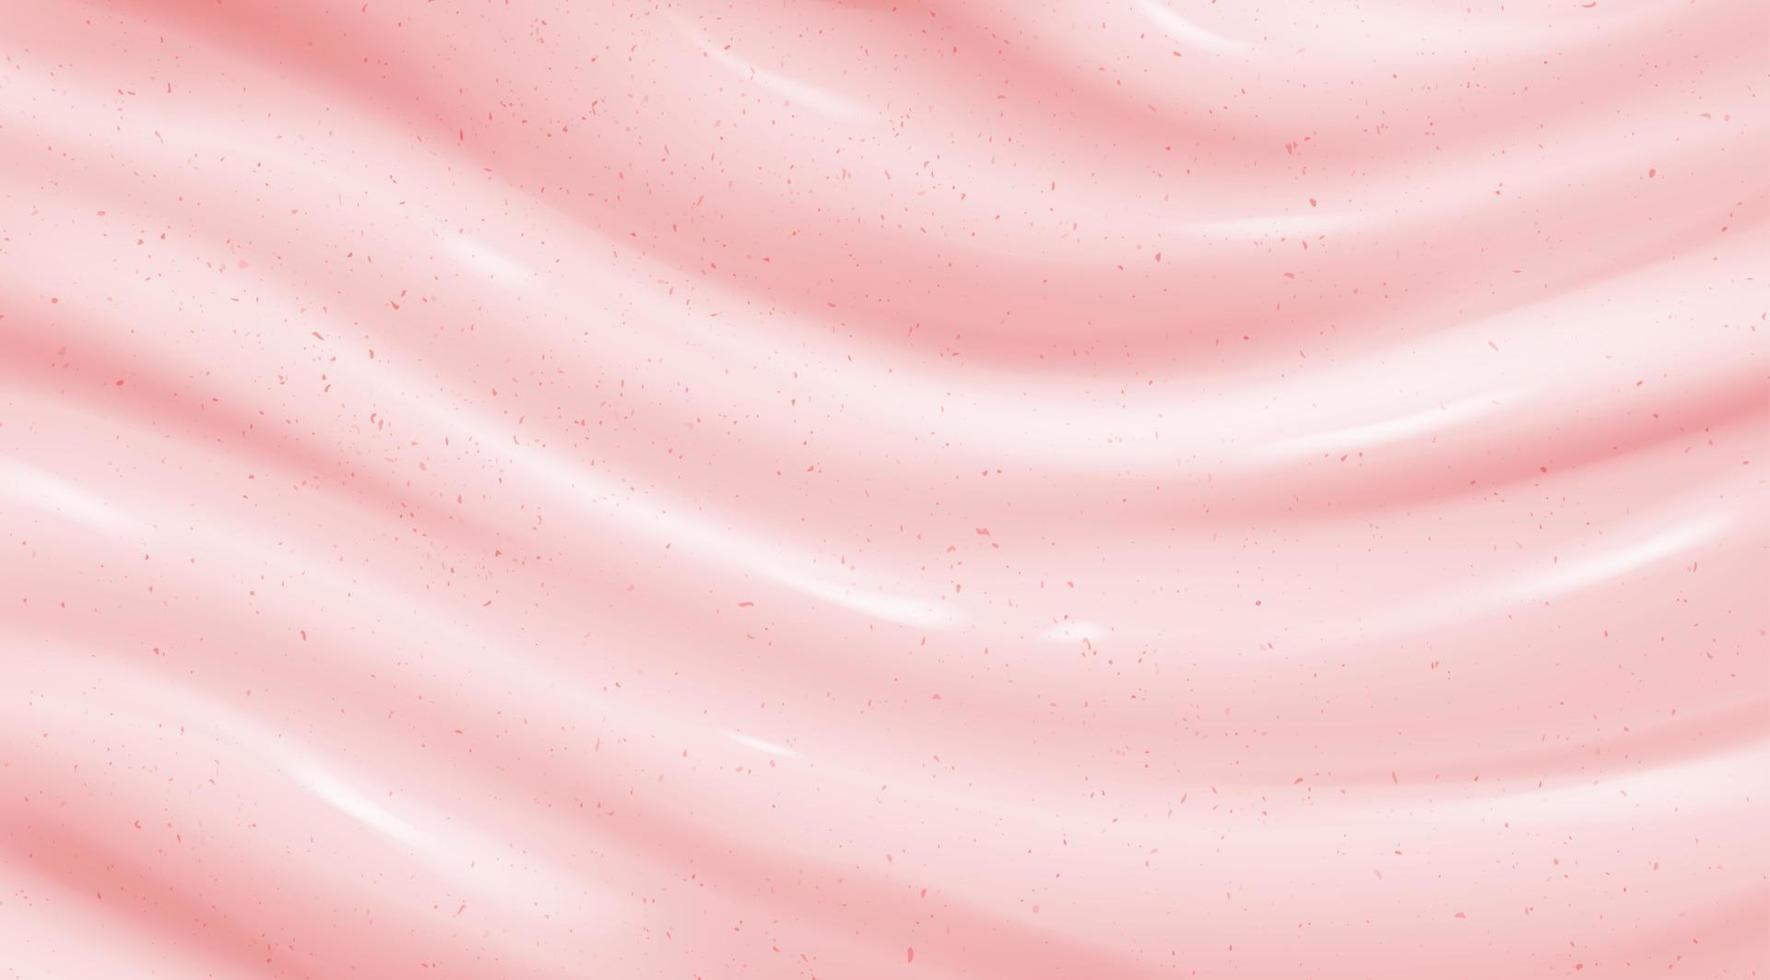 Realistic pink scrub or yoghurt background vector